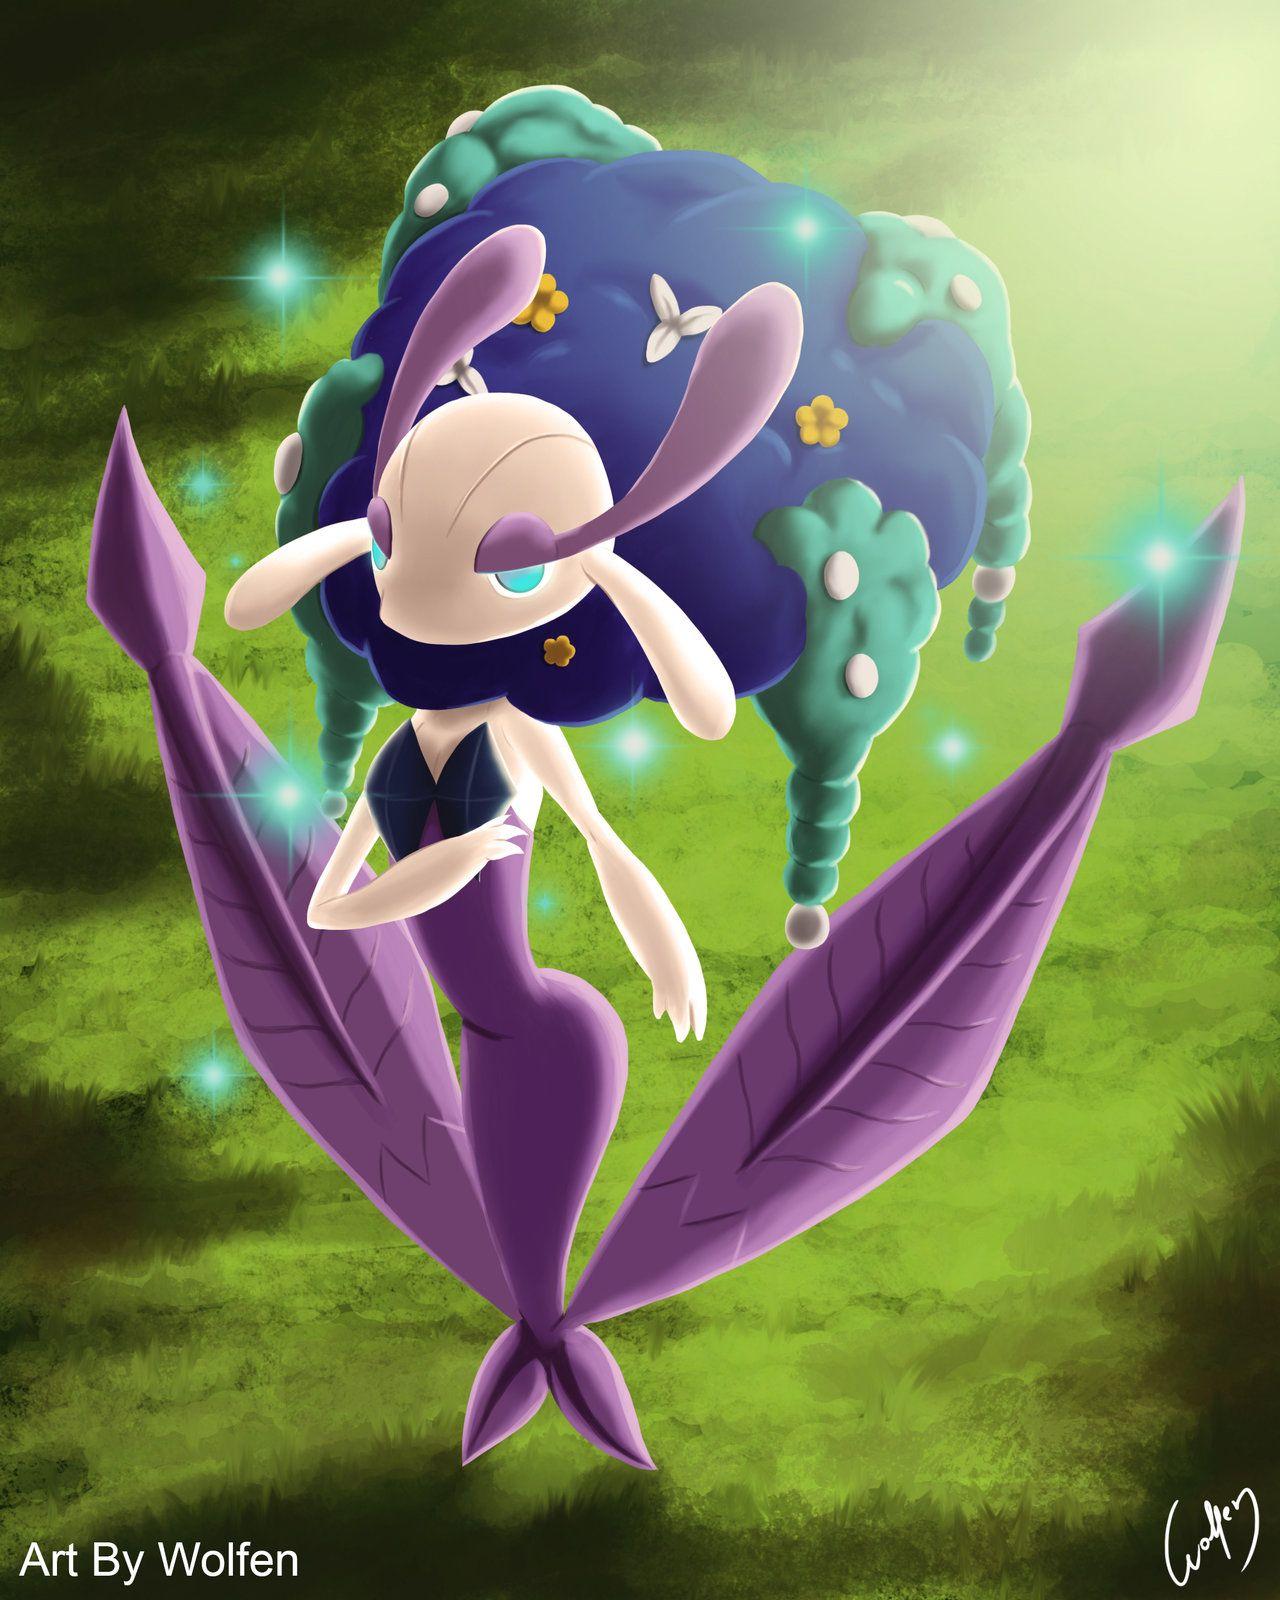 Florges Pokemon Wallpaper Image